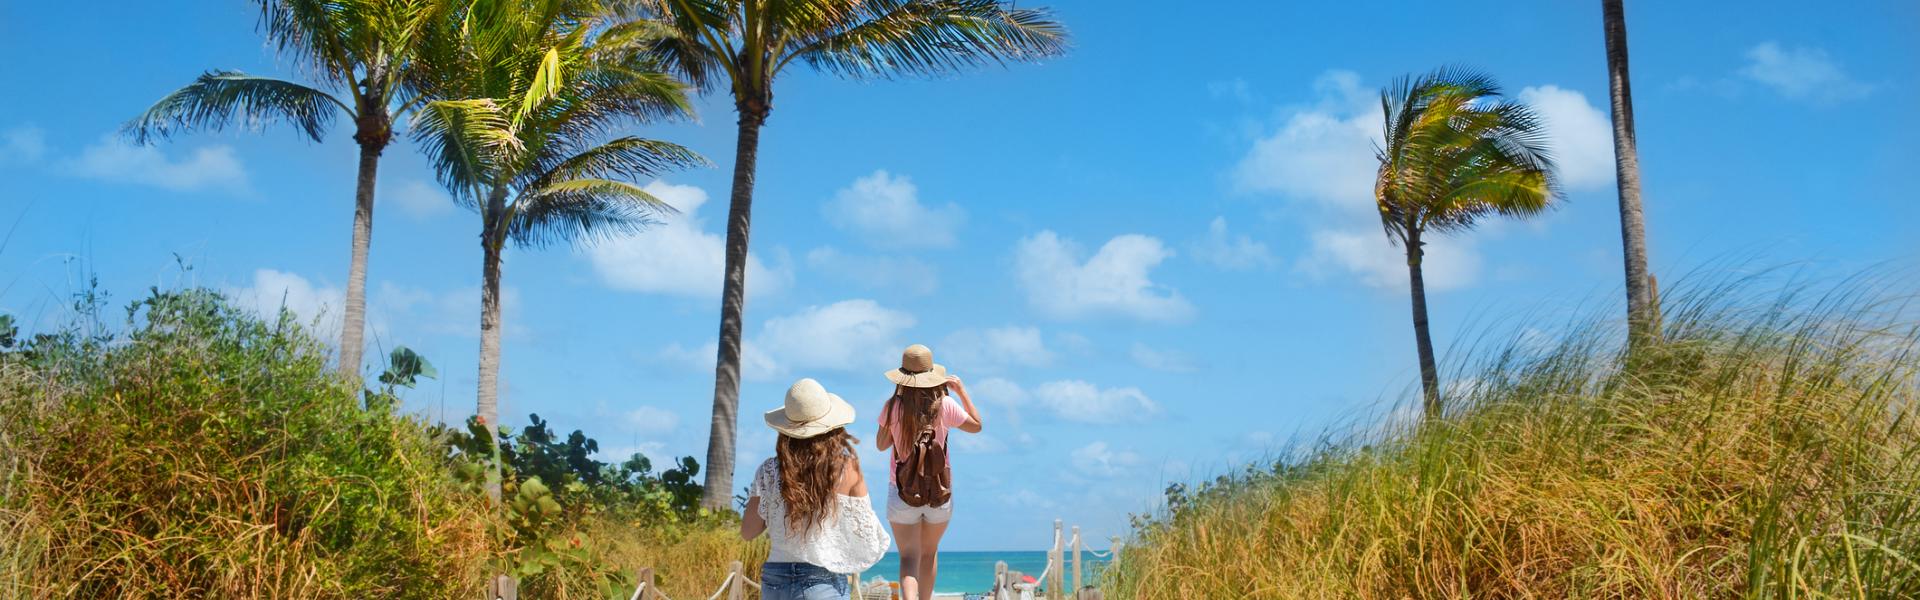 Top Destinations for a Weekend Getaway in Florida - HomeToGo